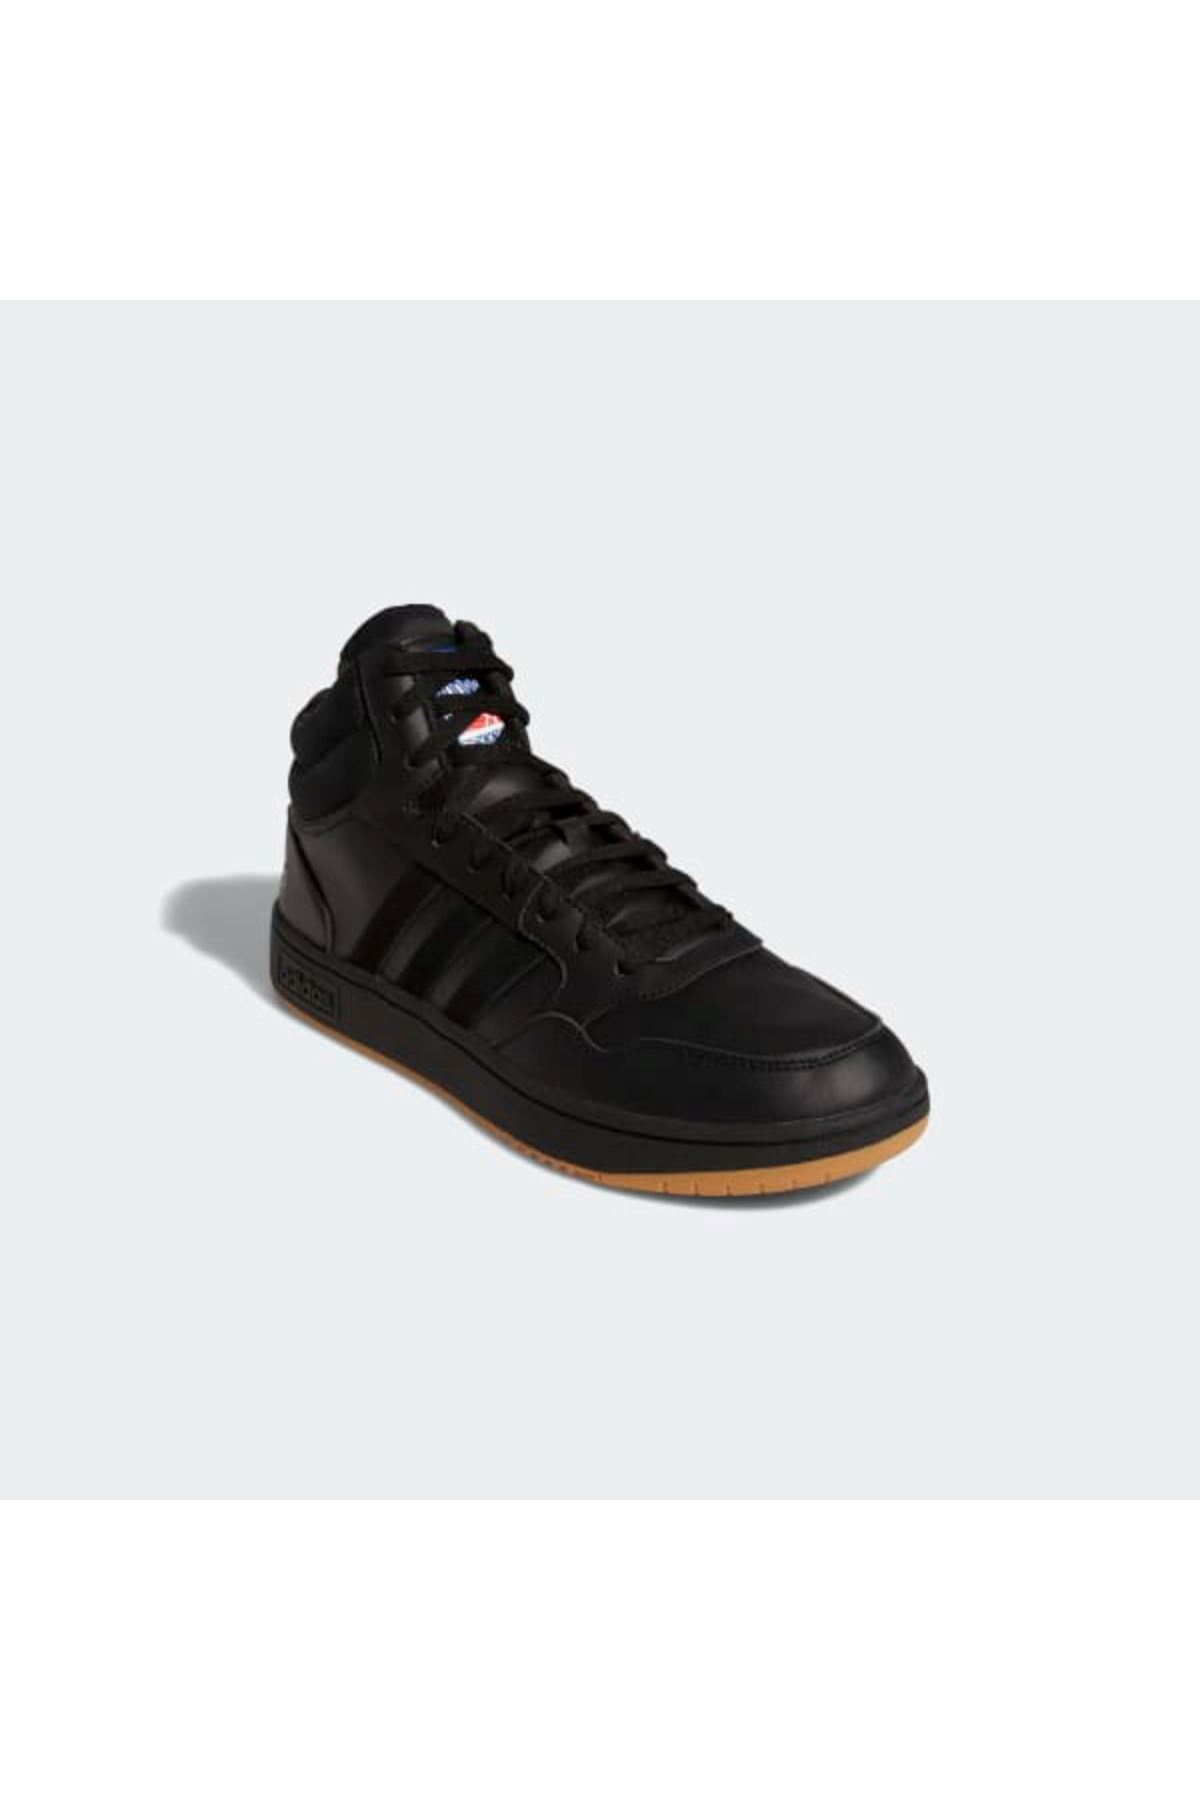 Adidas Hoops 3.0 Erkek Siyah Spor Ayakkabı - GY4745